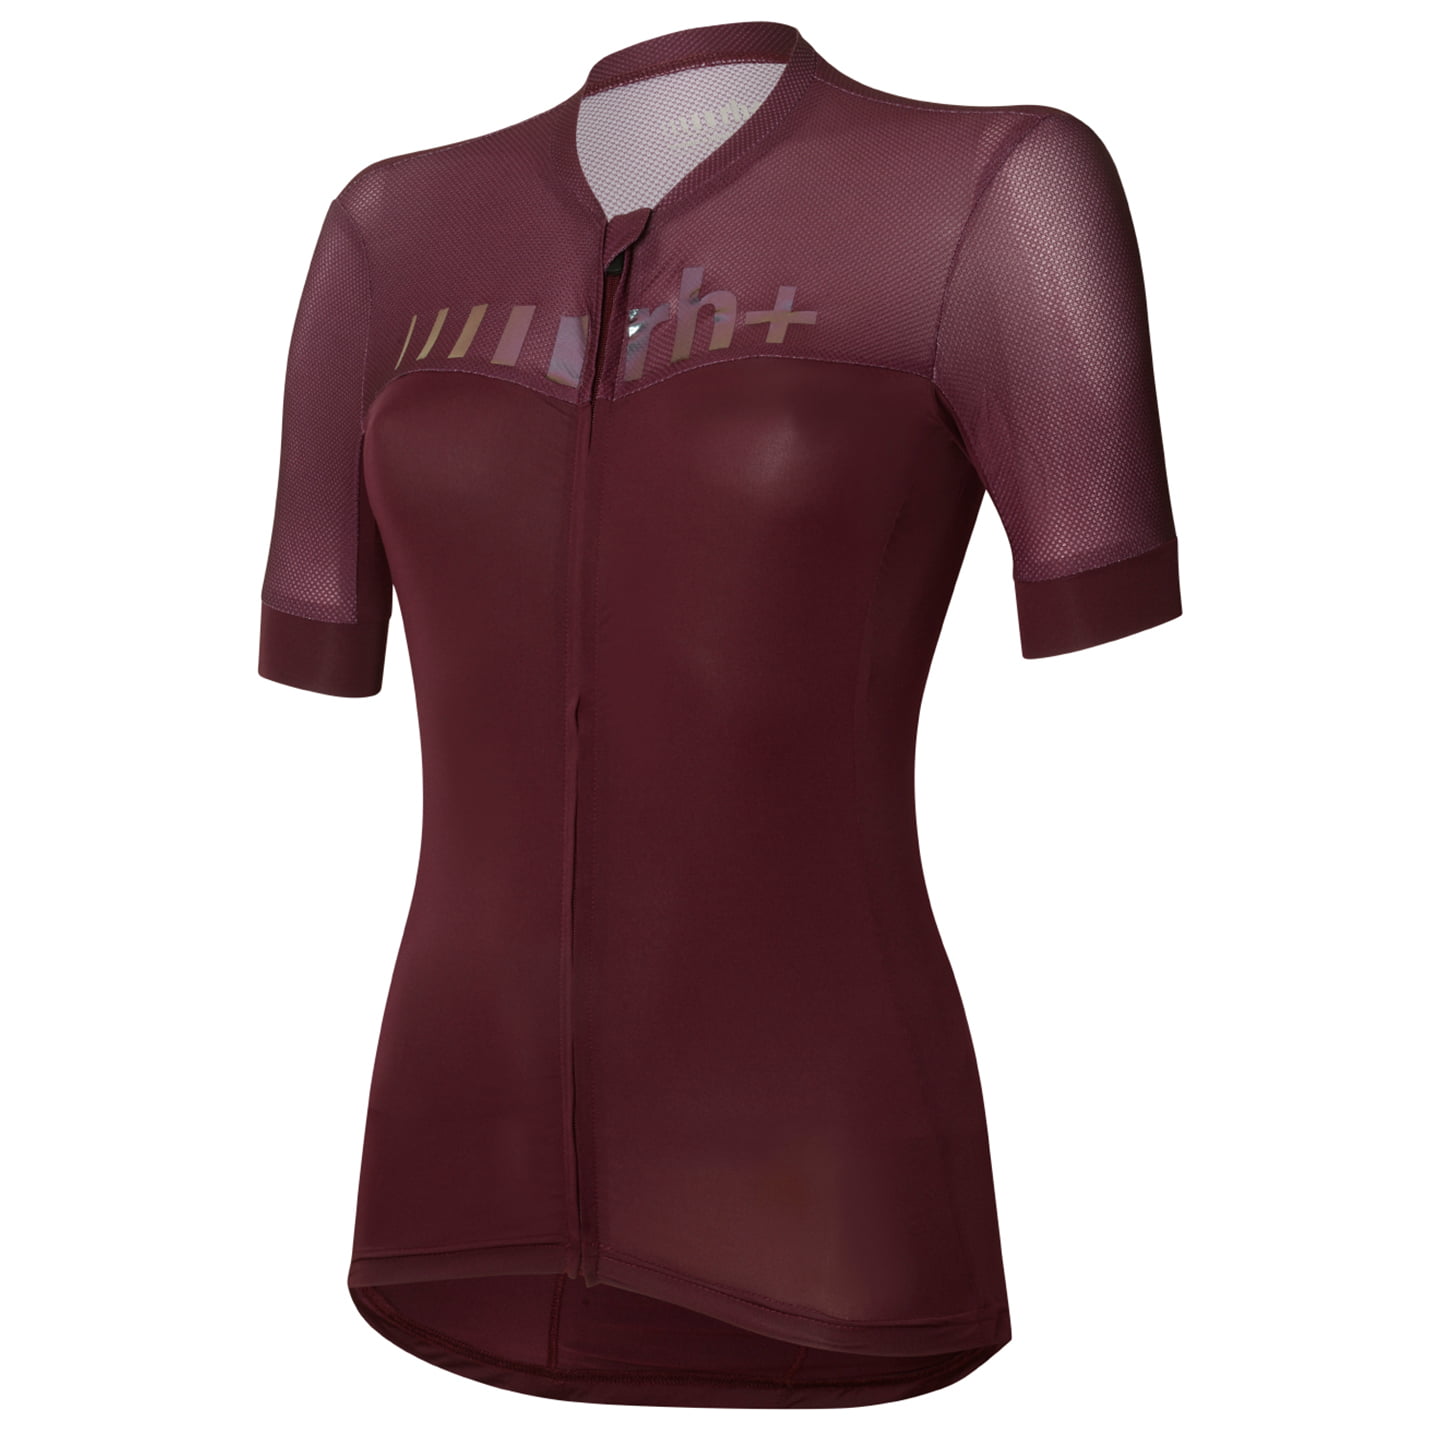 rh+ Logo Women’s Jersey Women’s Short Sleeve Jersey, size M, Cycling jersey, Cycle clothing